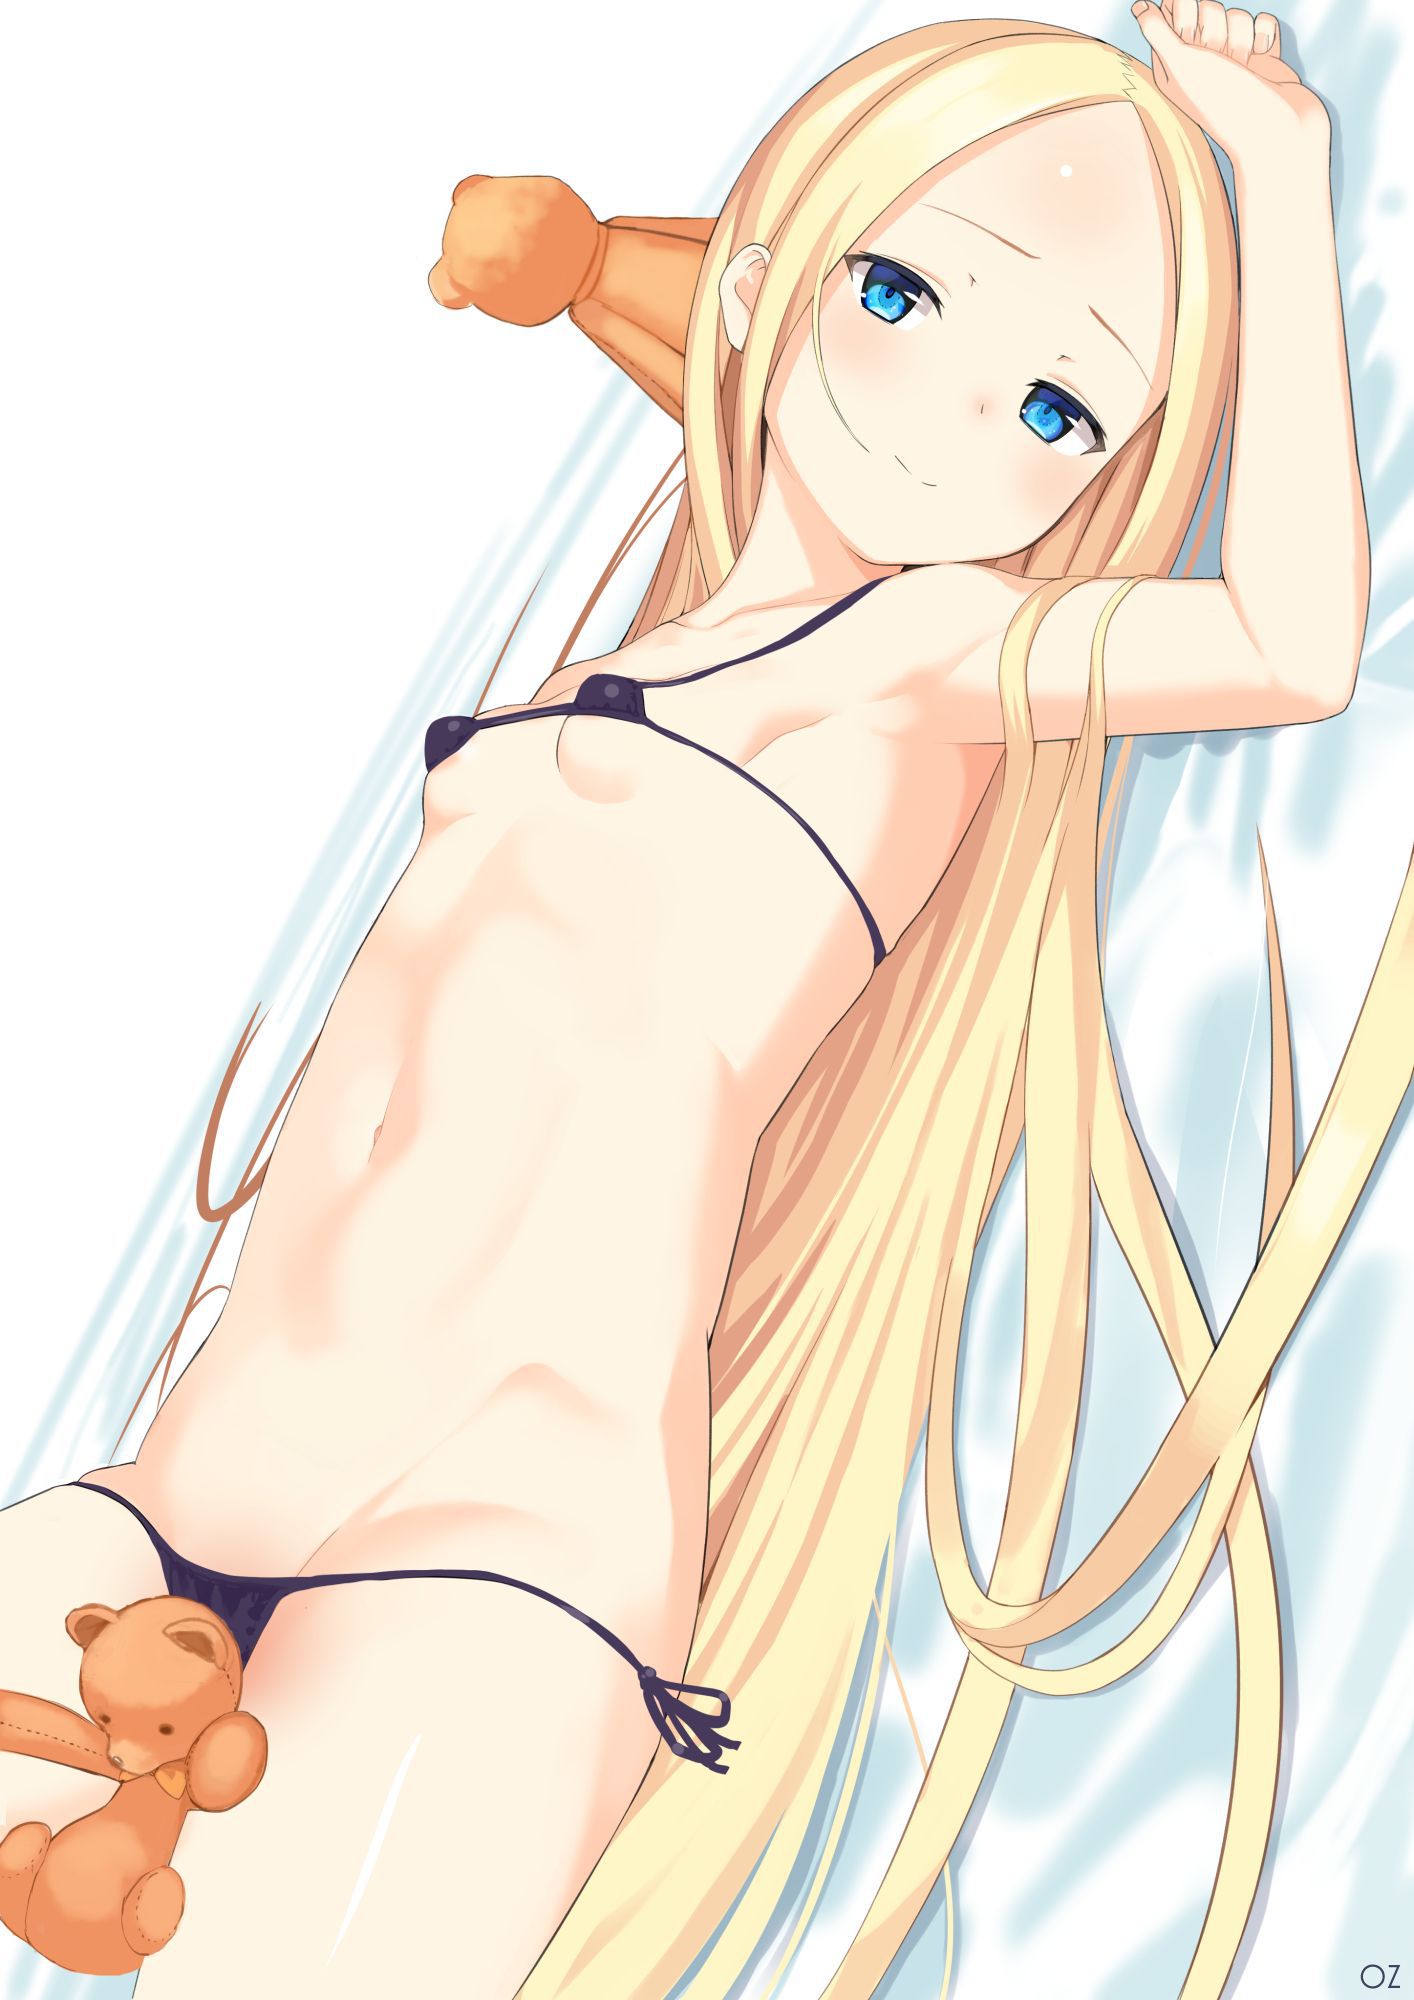 [Secondary, ZIP] beautiful girl image of micro bikini that porori when a little 13